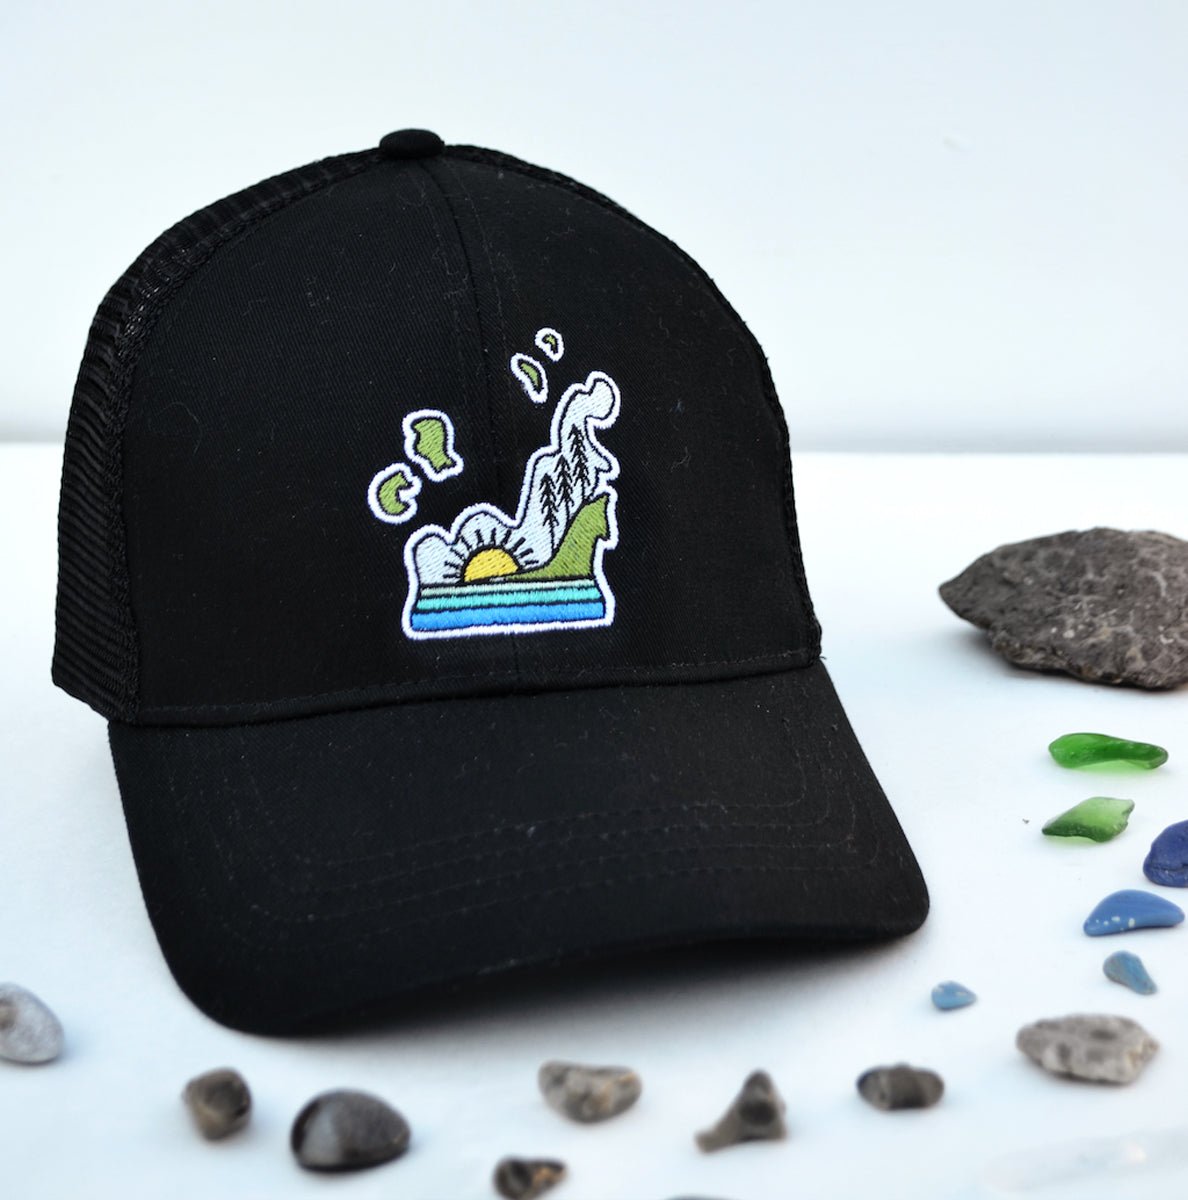 Sustainable Leelanau Low-profile Trucker Hat in Black - jacobandlouise.com